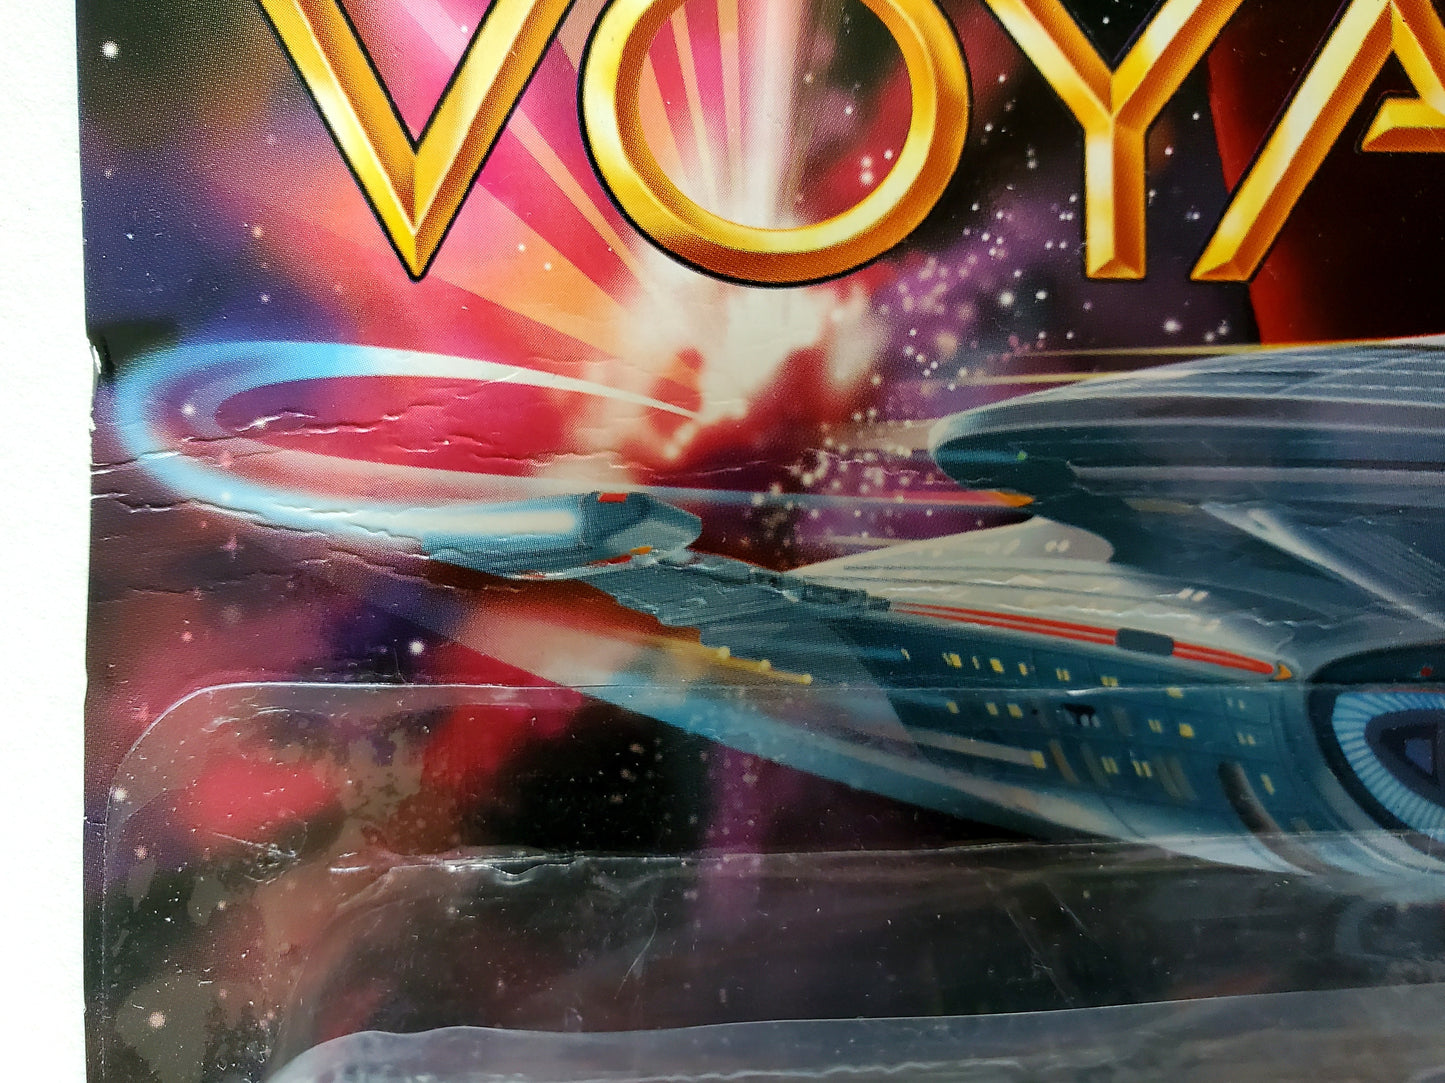 Star Trek: Voyager The Kazon Action Figure